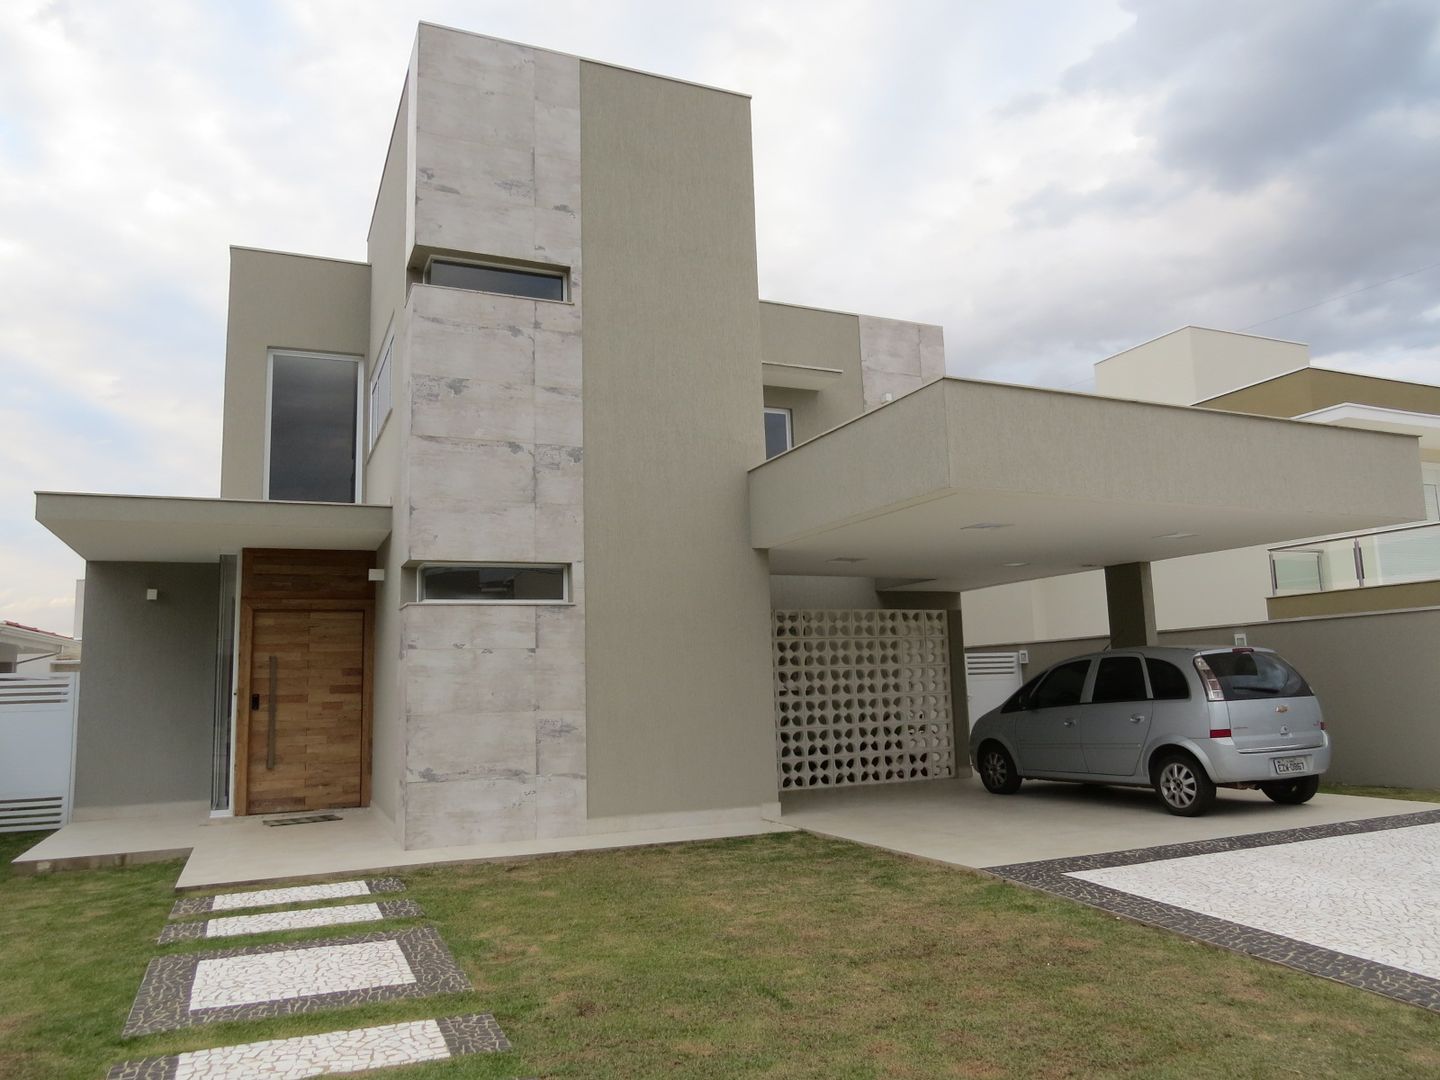 Residencia Reserva da Serra, Habitat arquitetura Habitat arquitetura Modern houses Ceramic